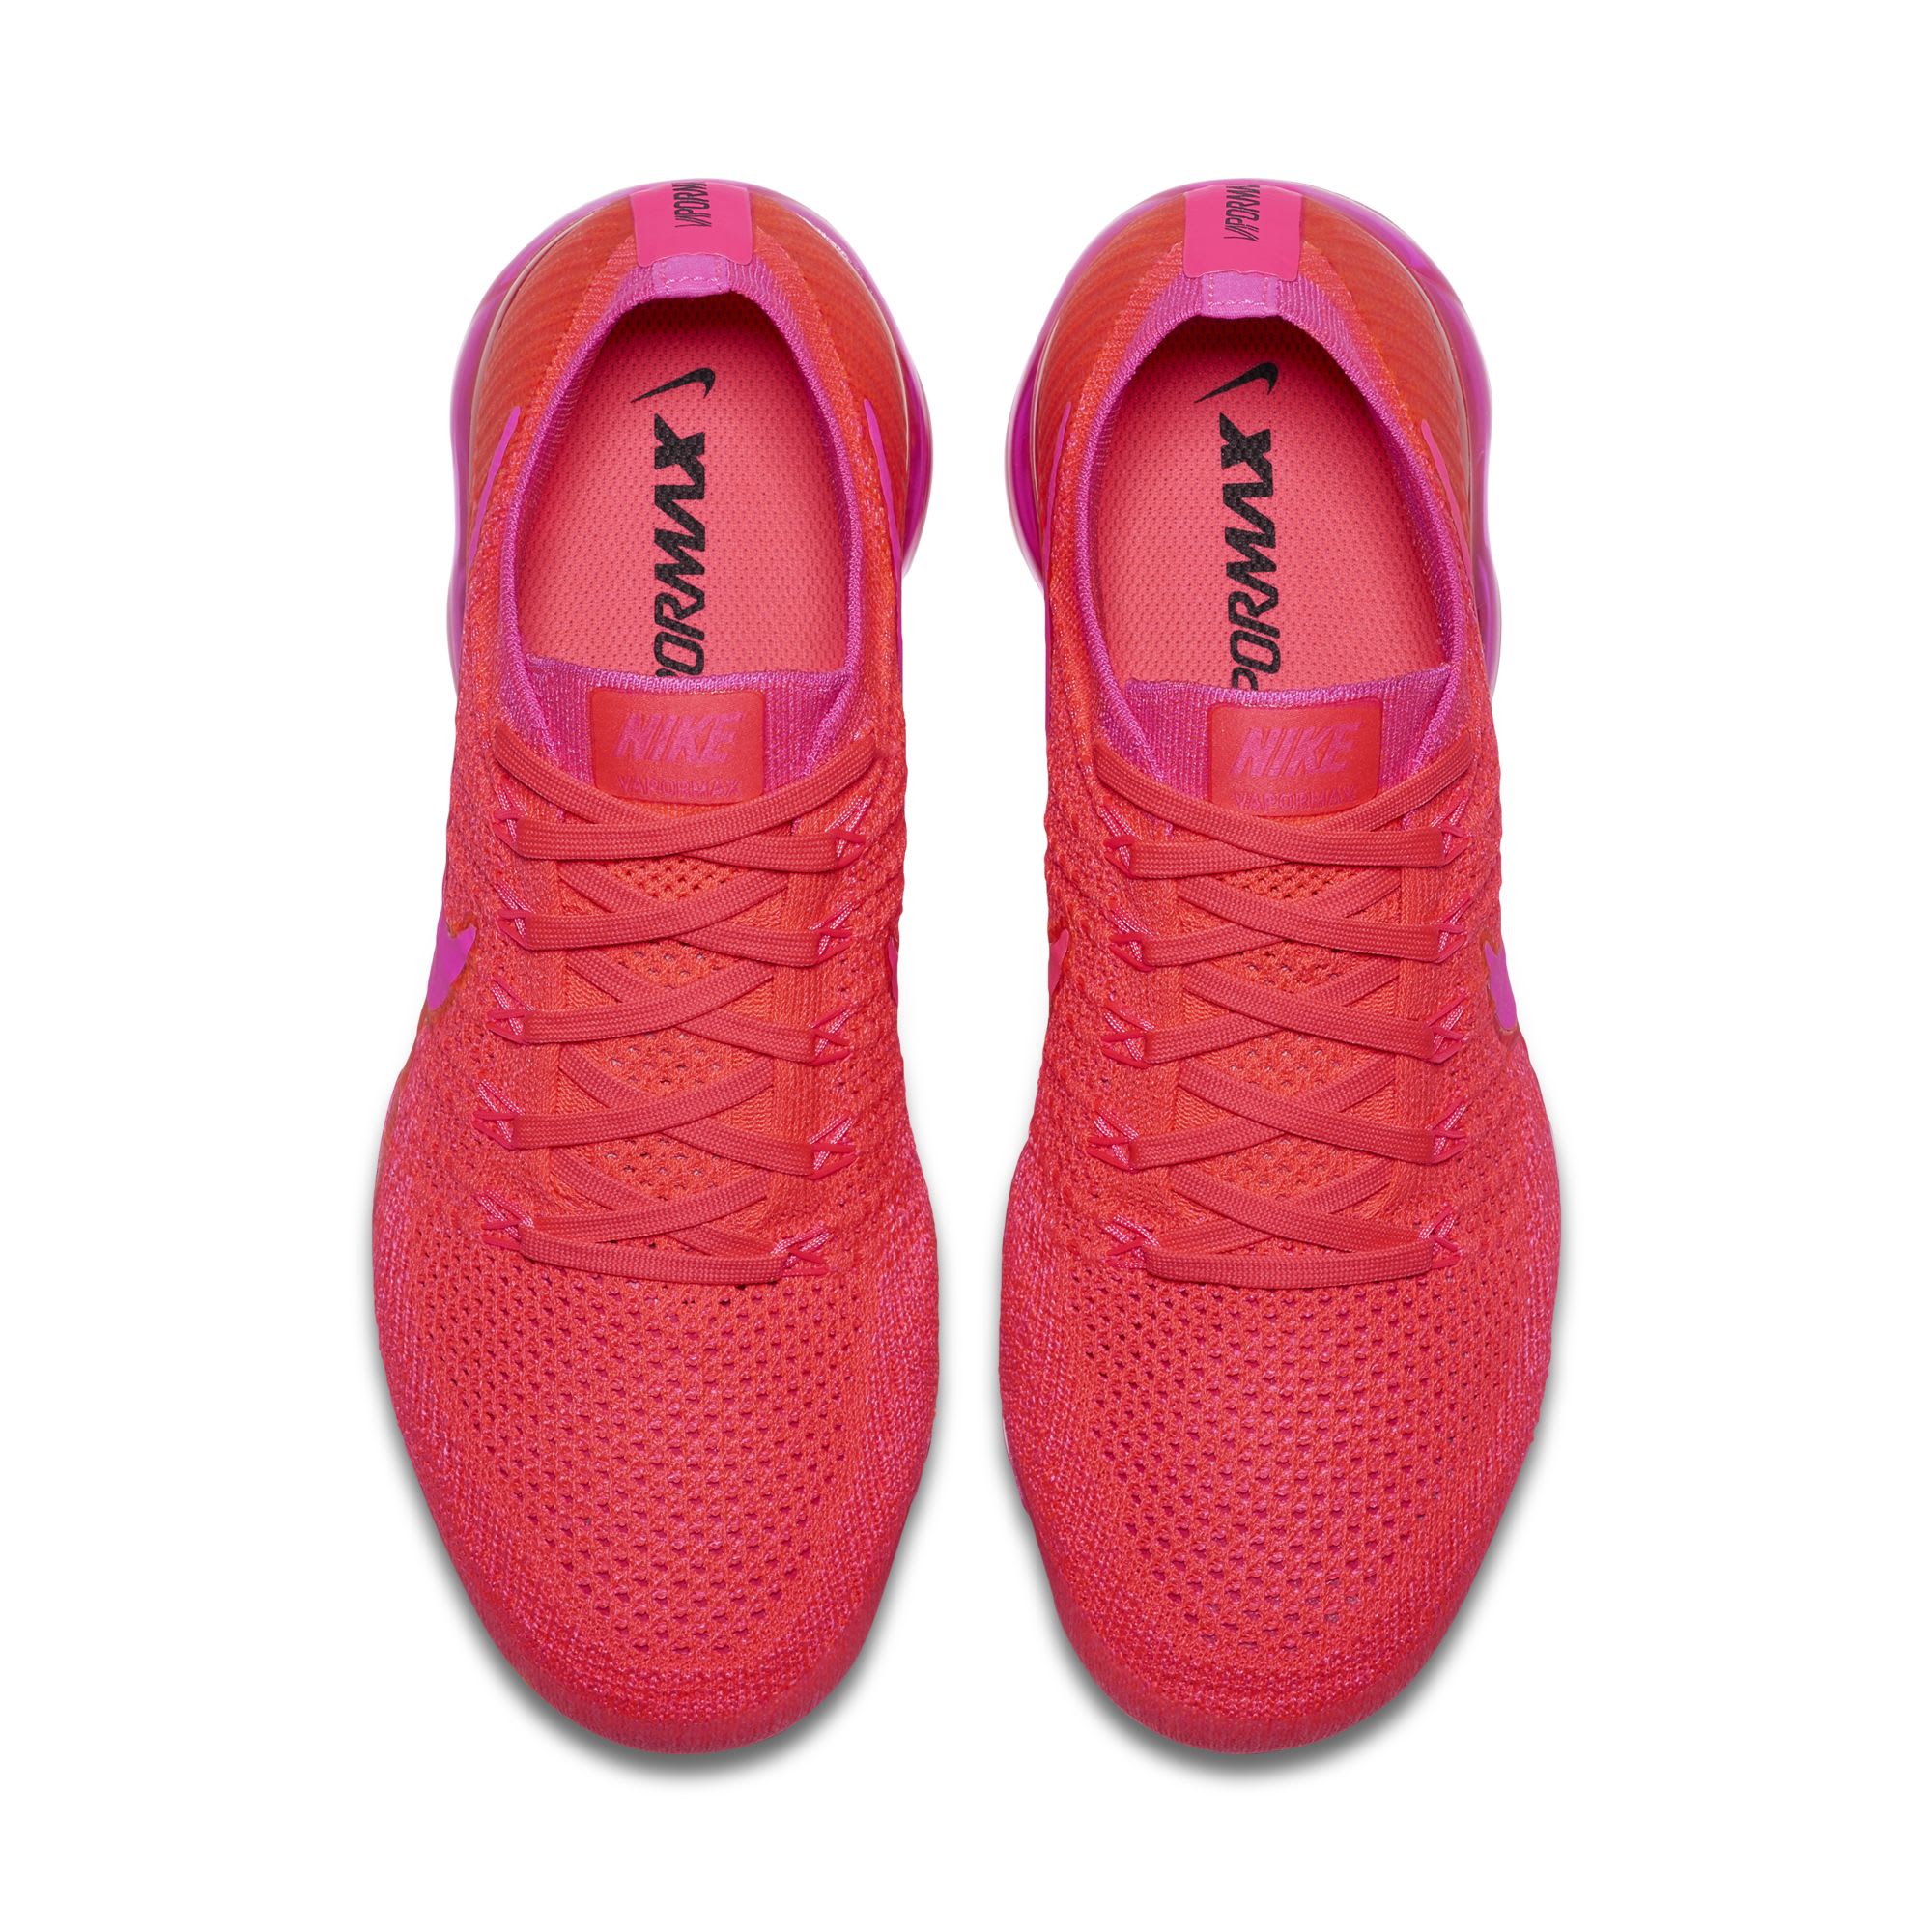 Nike Air Vapormax WMNS Bright Crimson/Hot Pink (Top)